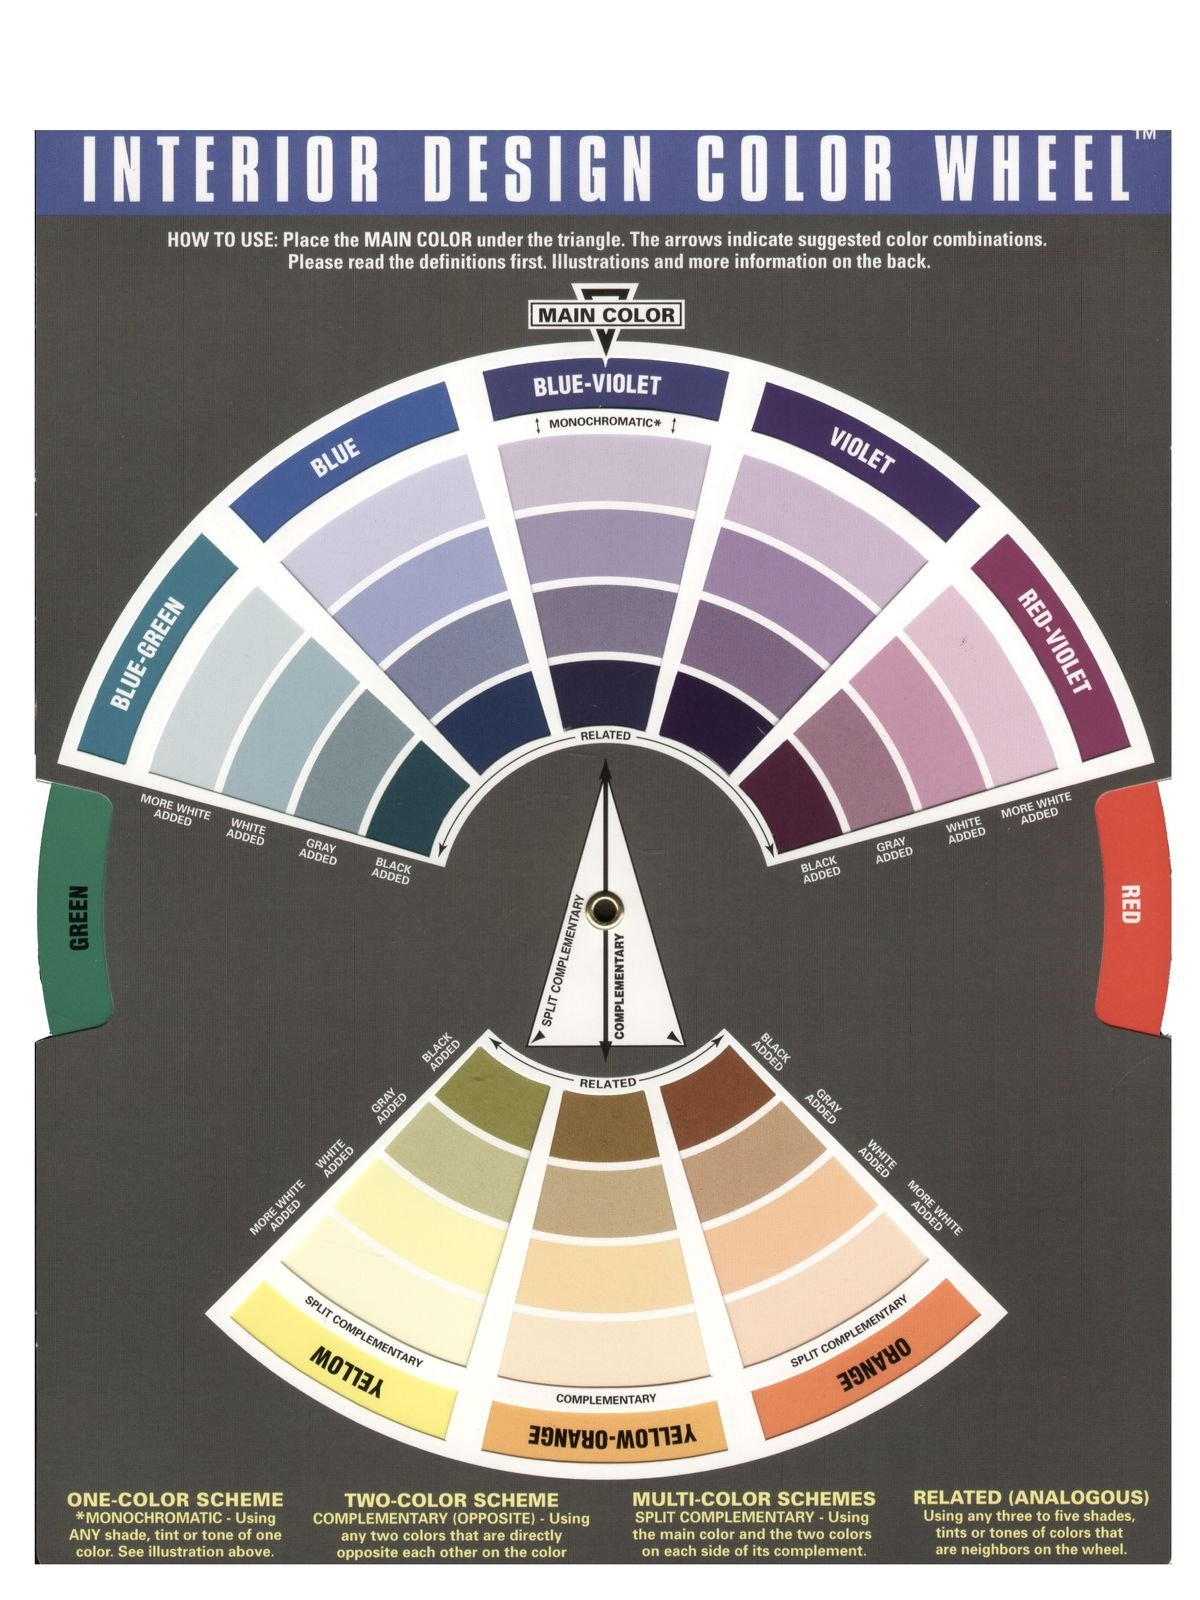 The Color Wheel Company - Interior Design Wheel